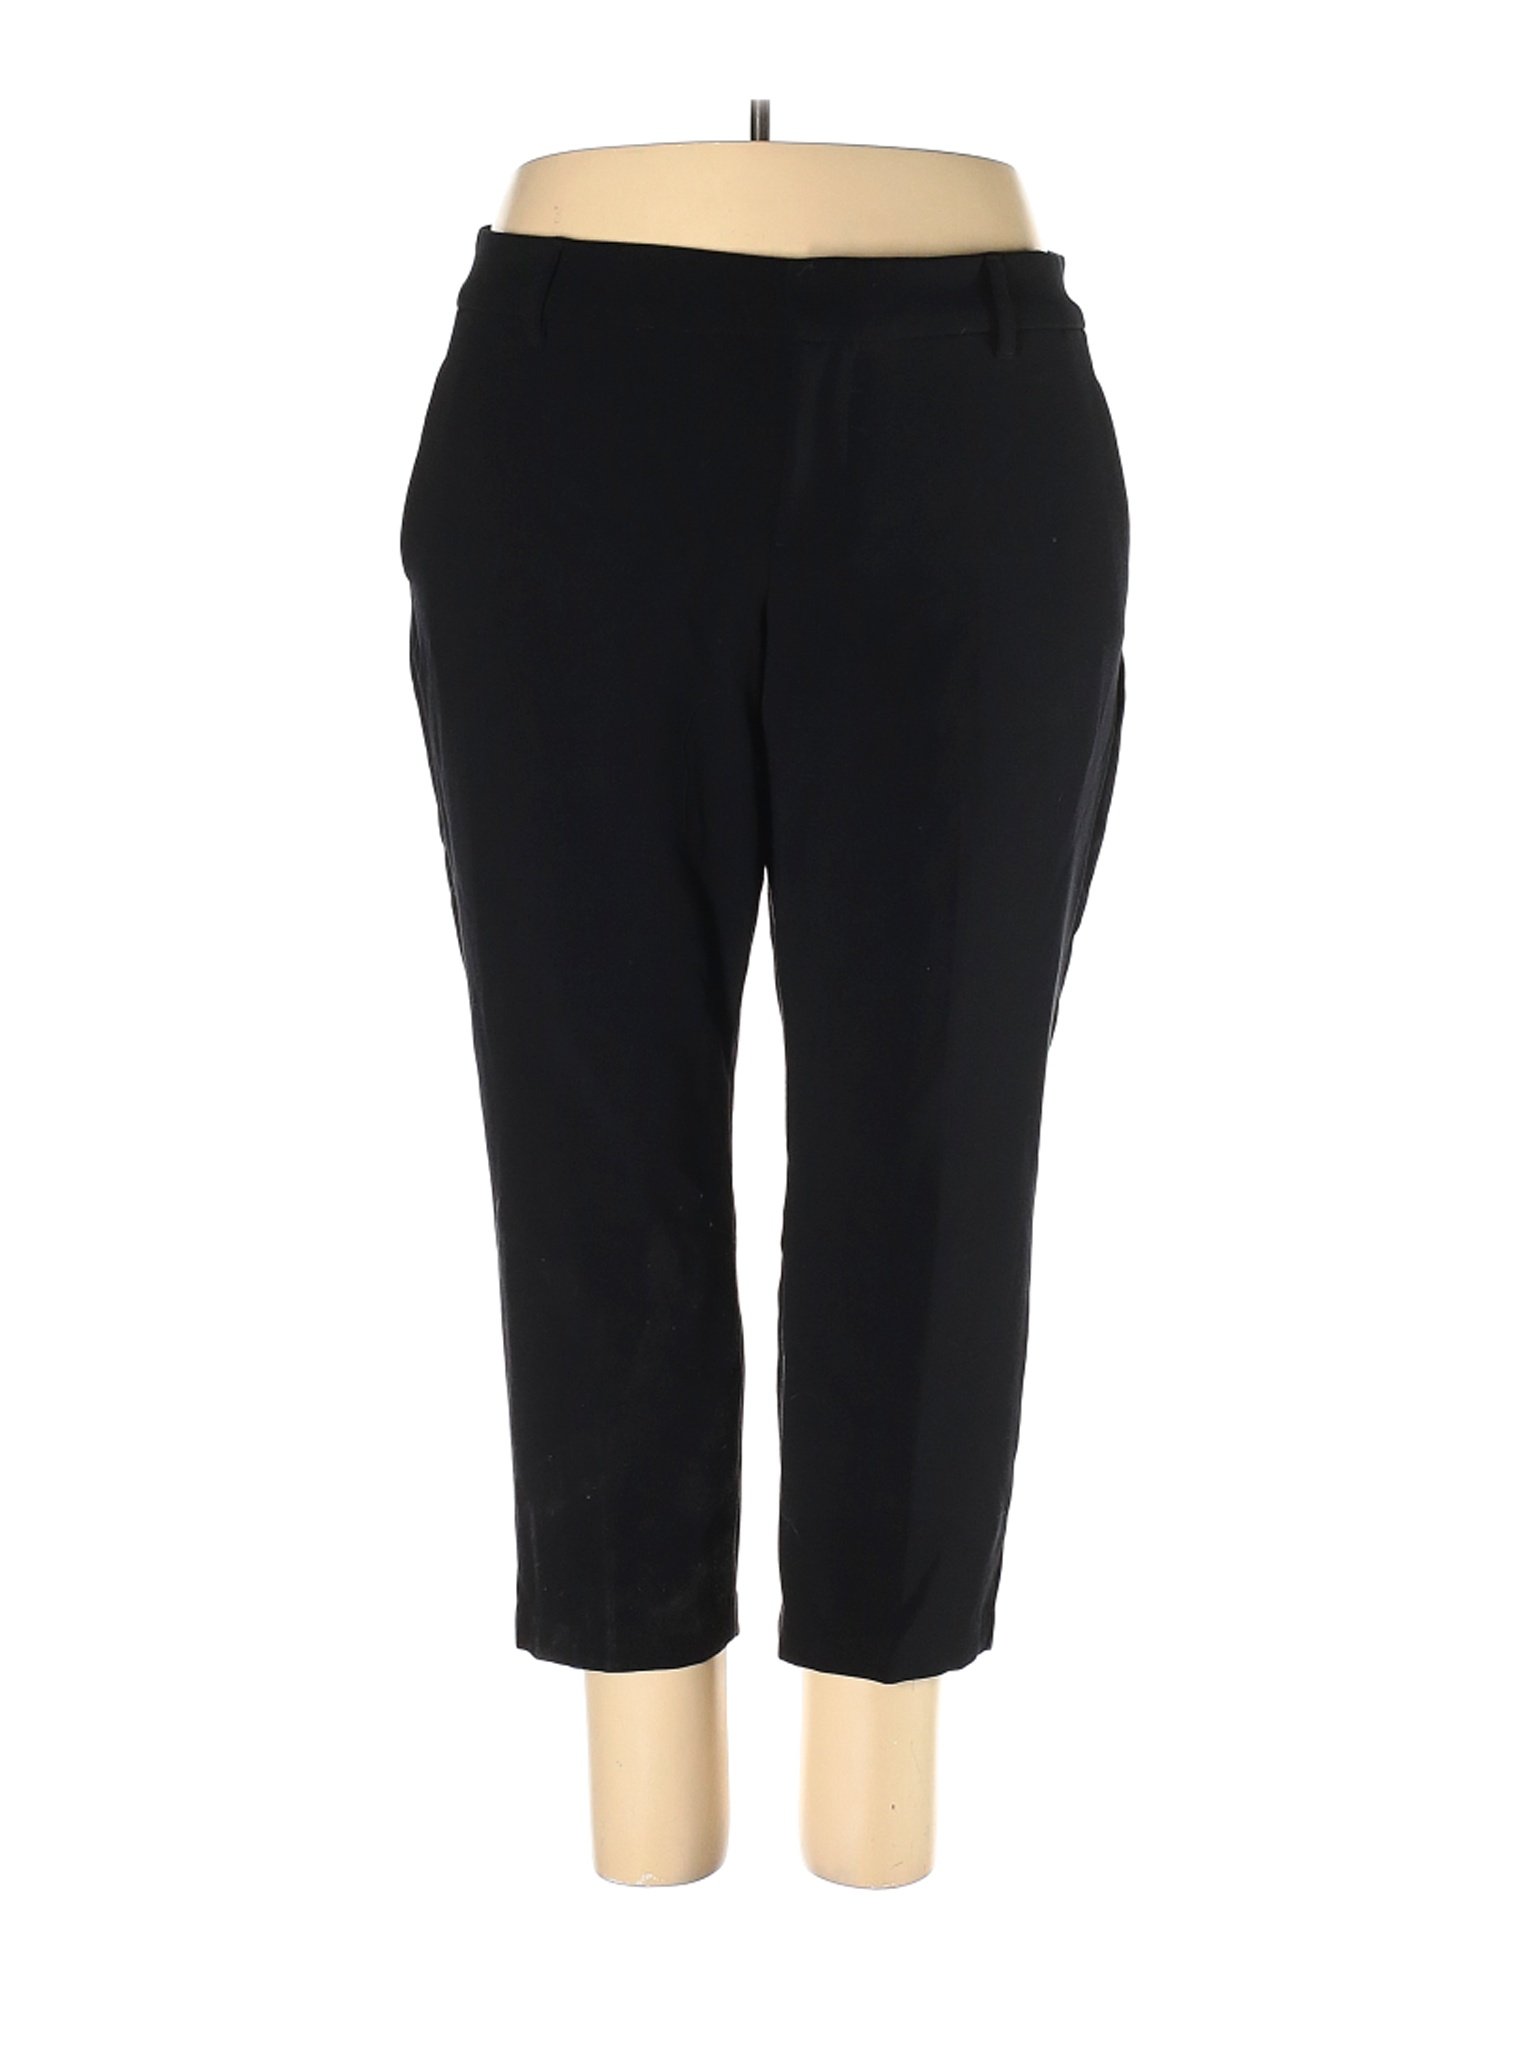 Old Navy Women Black Dress Pants 20 Plus | eBay